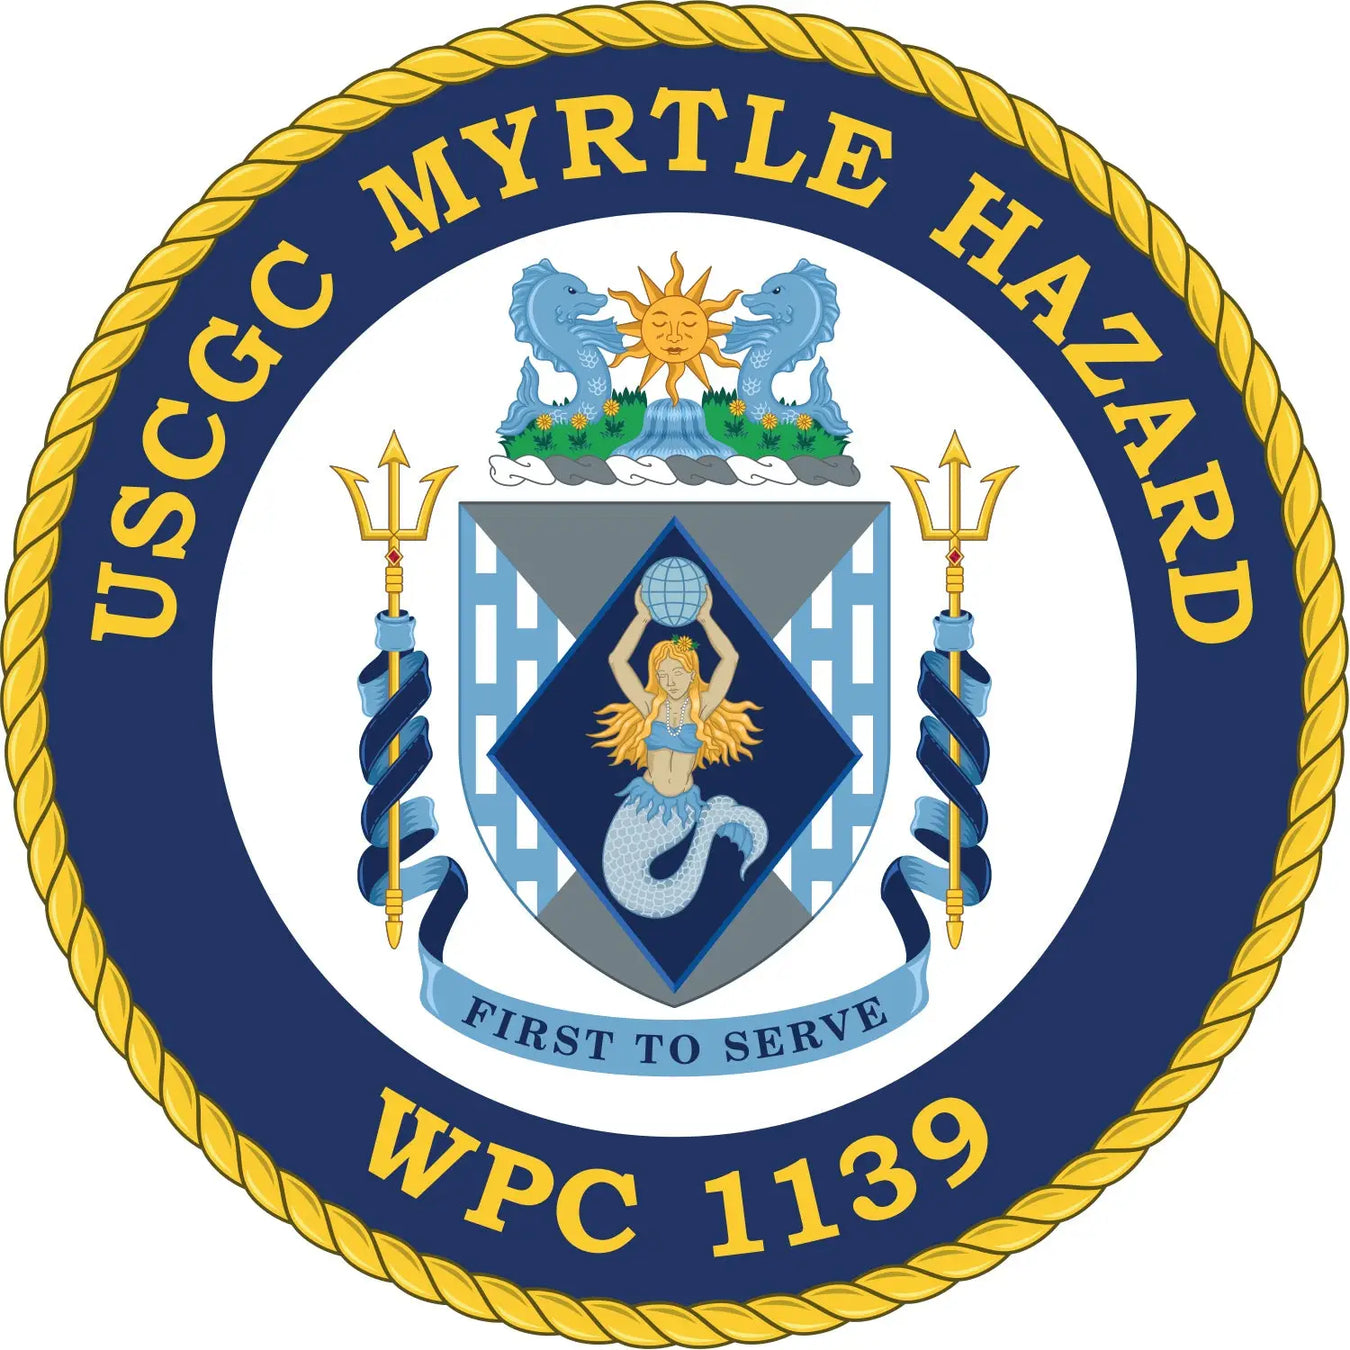 USCGC Myrtle Hazard (WPC-1139)